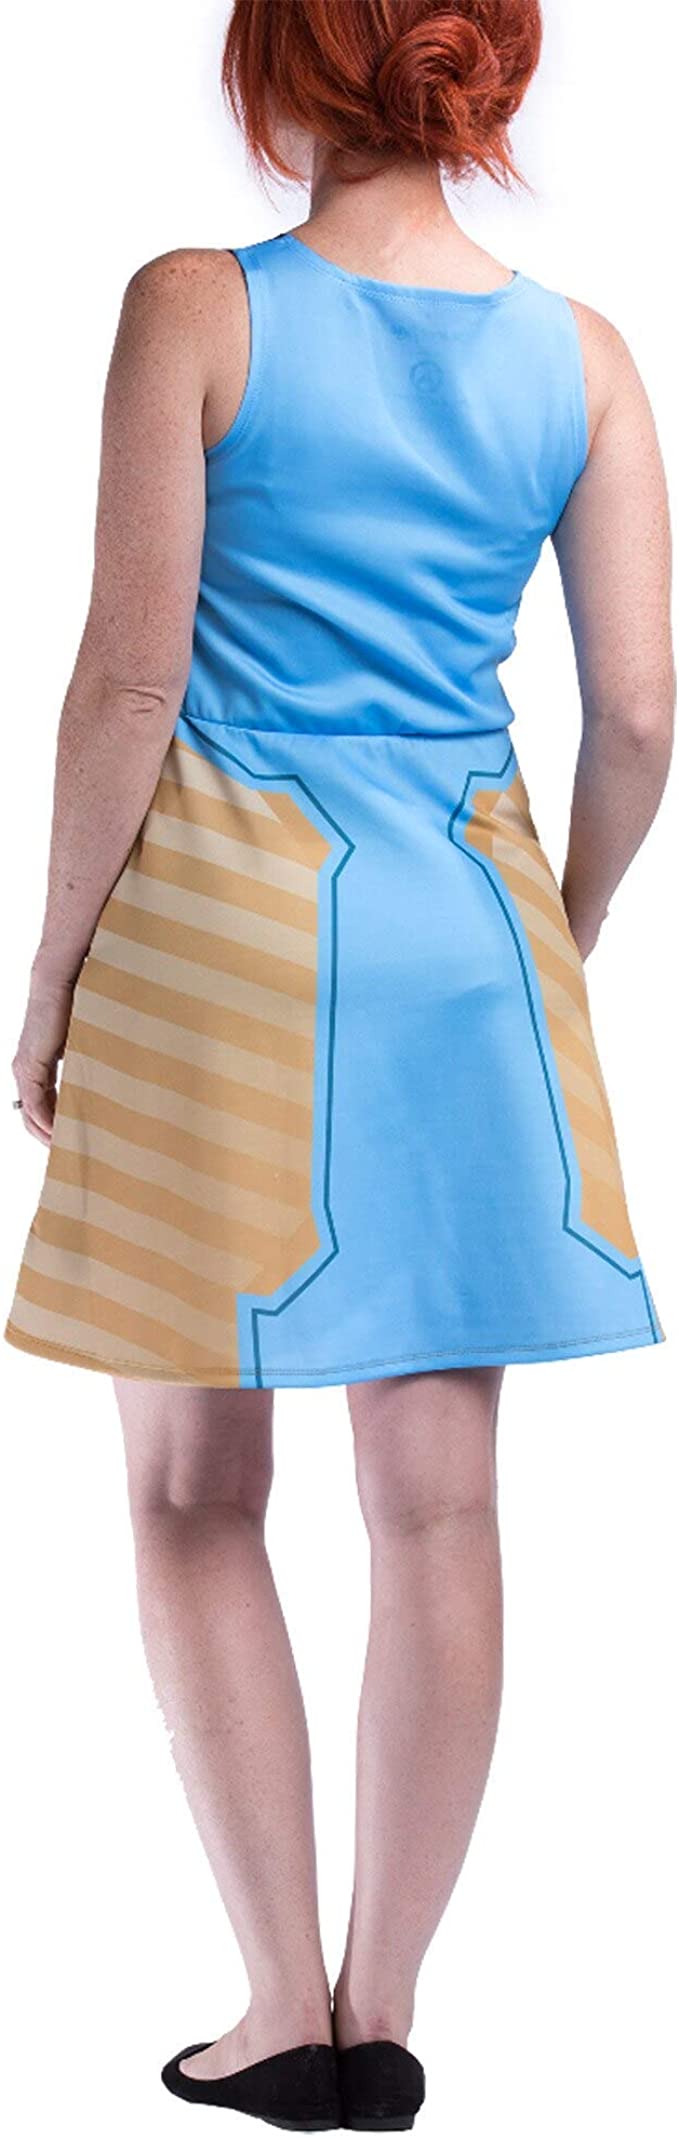 Overwatch Women's Symmetra Light Blue Character Sleeveless Skater Dress (Large)